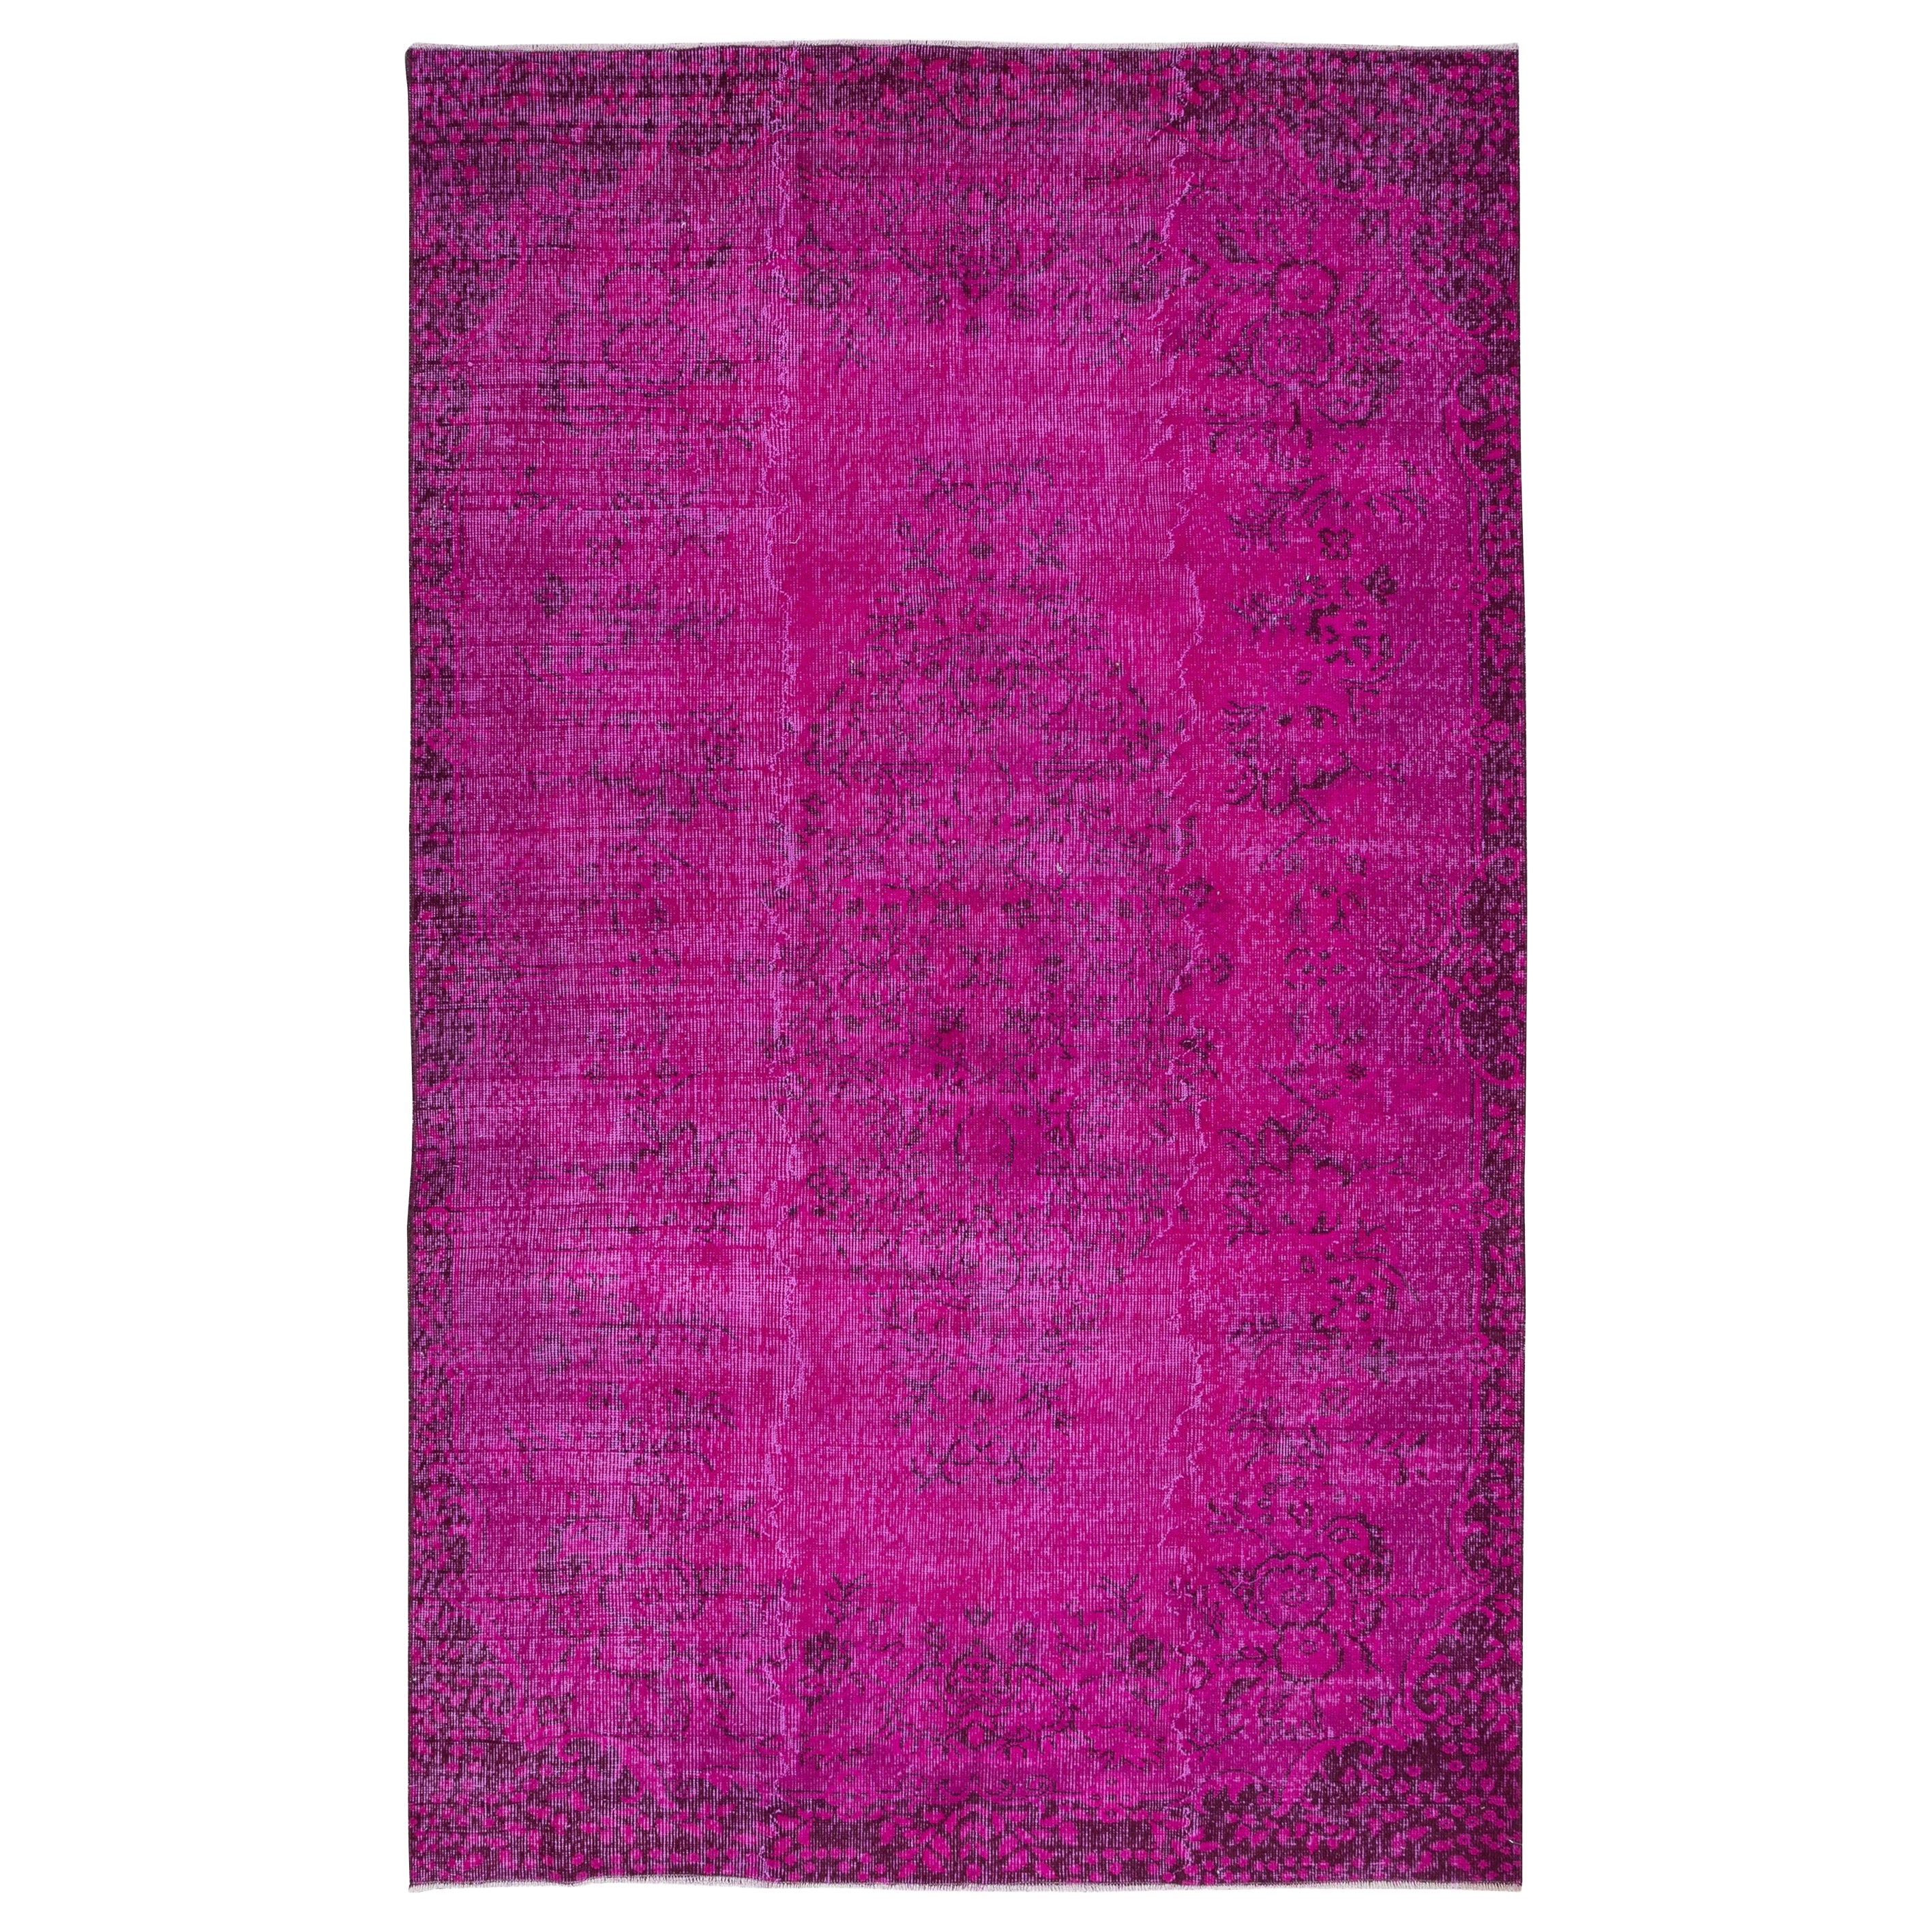 5.4x8.7 Ft Hot Pink Anatolian Area Rug with Medallion, Modern Handmade Carpet